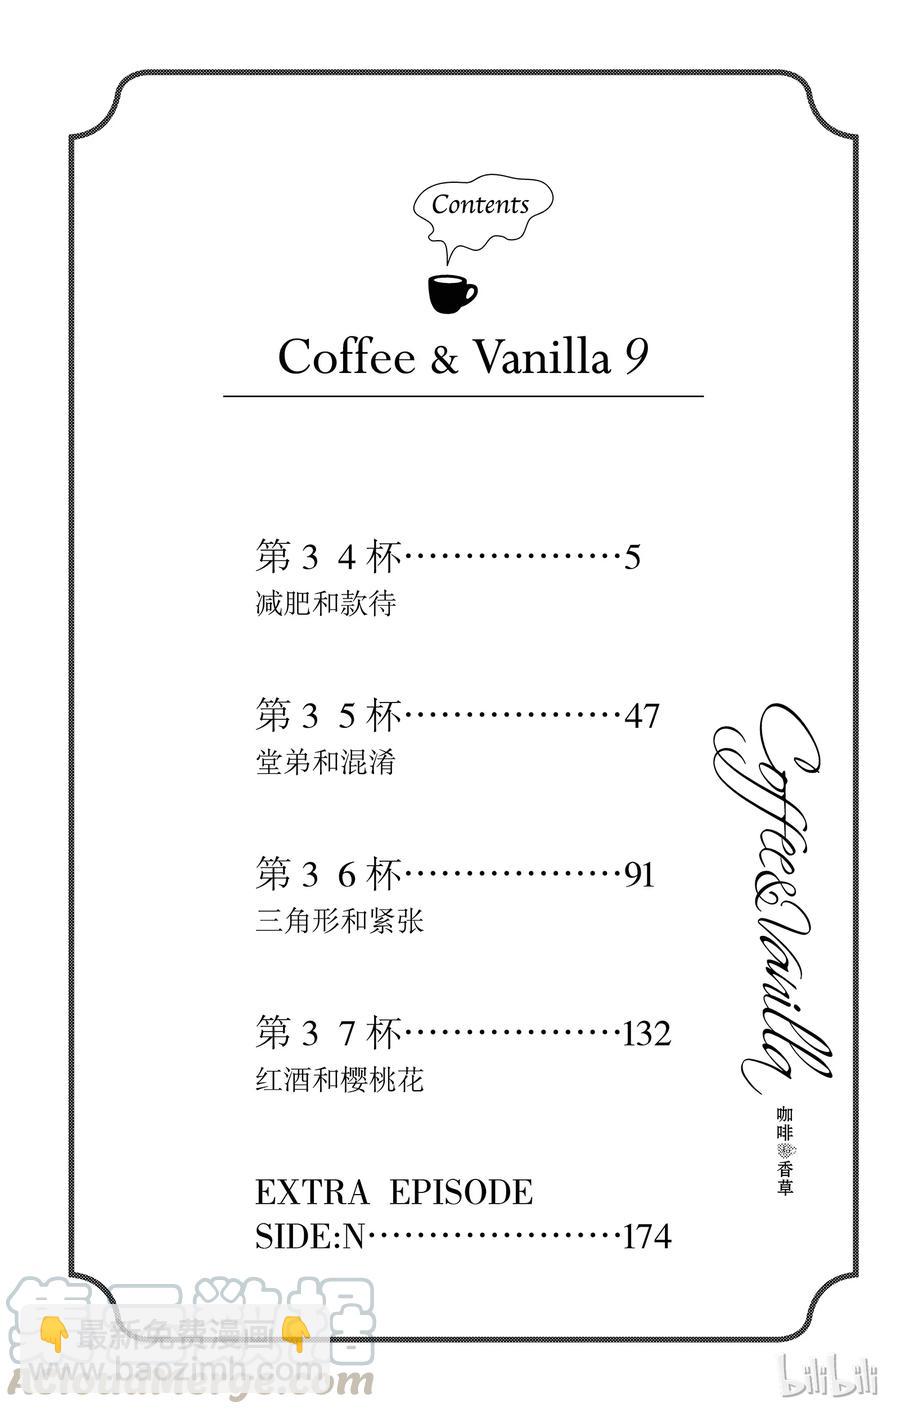 Coffee & Vanilla 咖啡和香草 - 34 減肥和款待 - 5